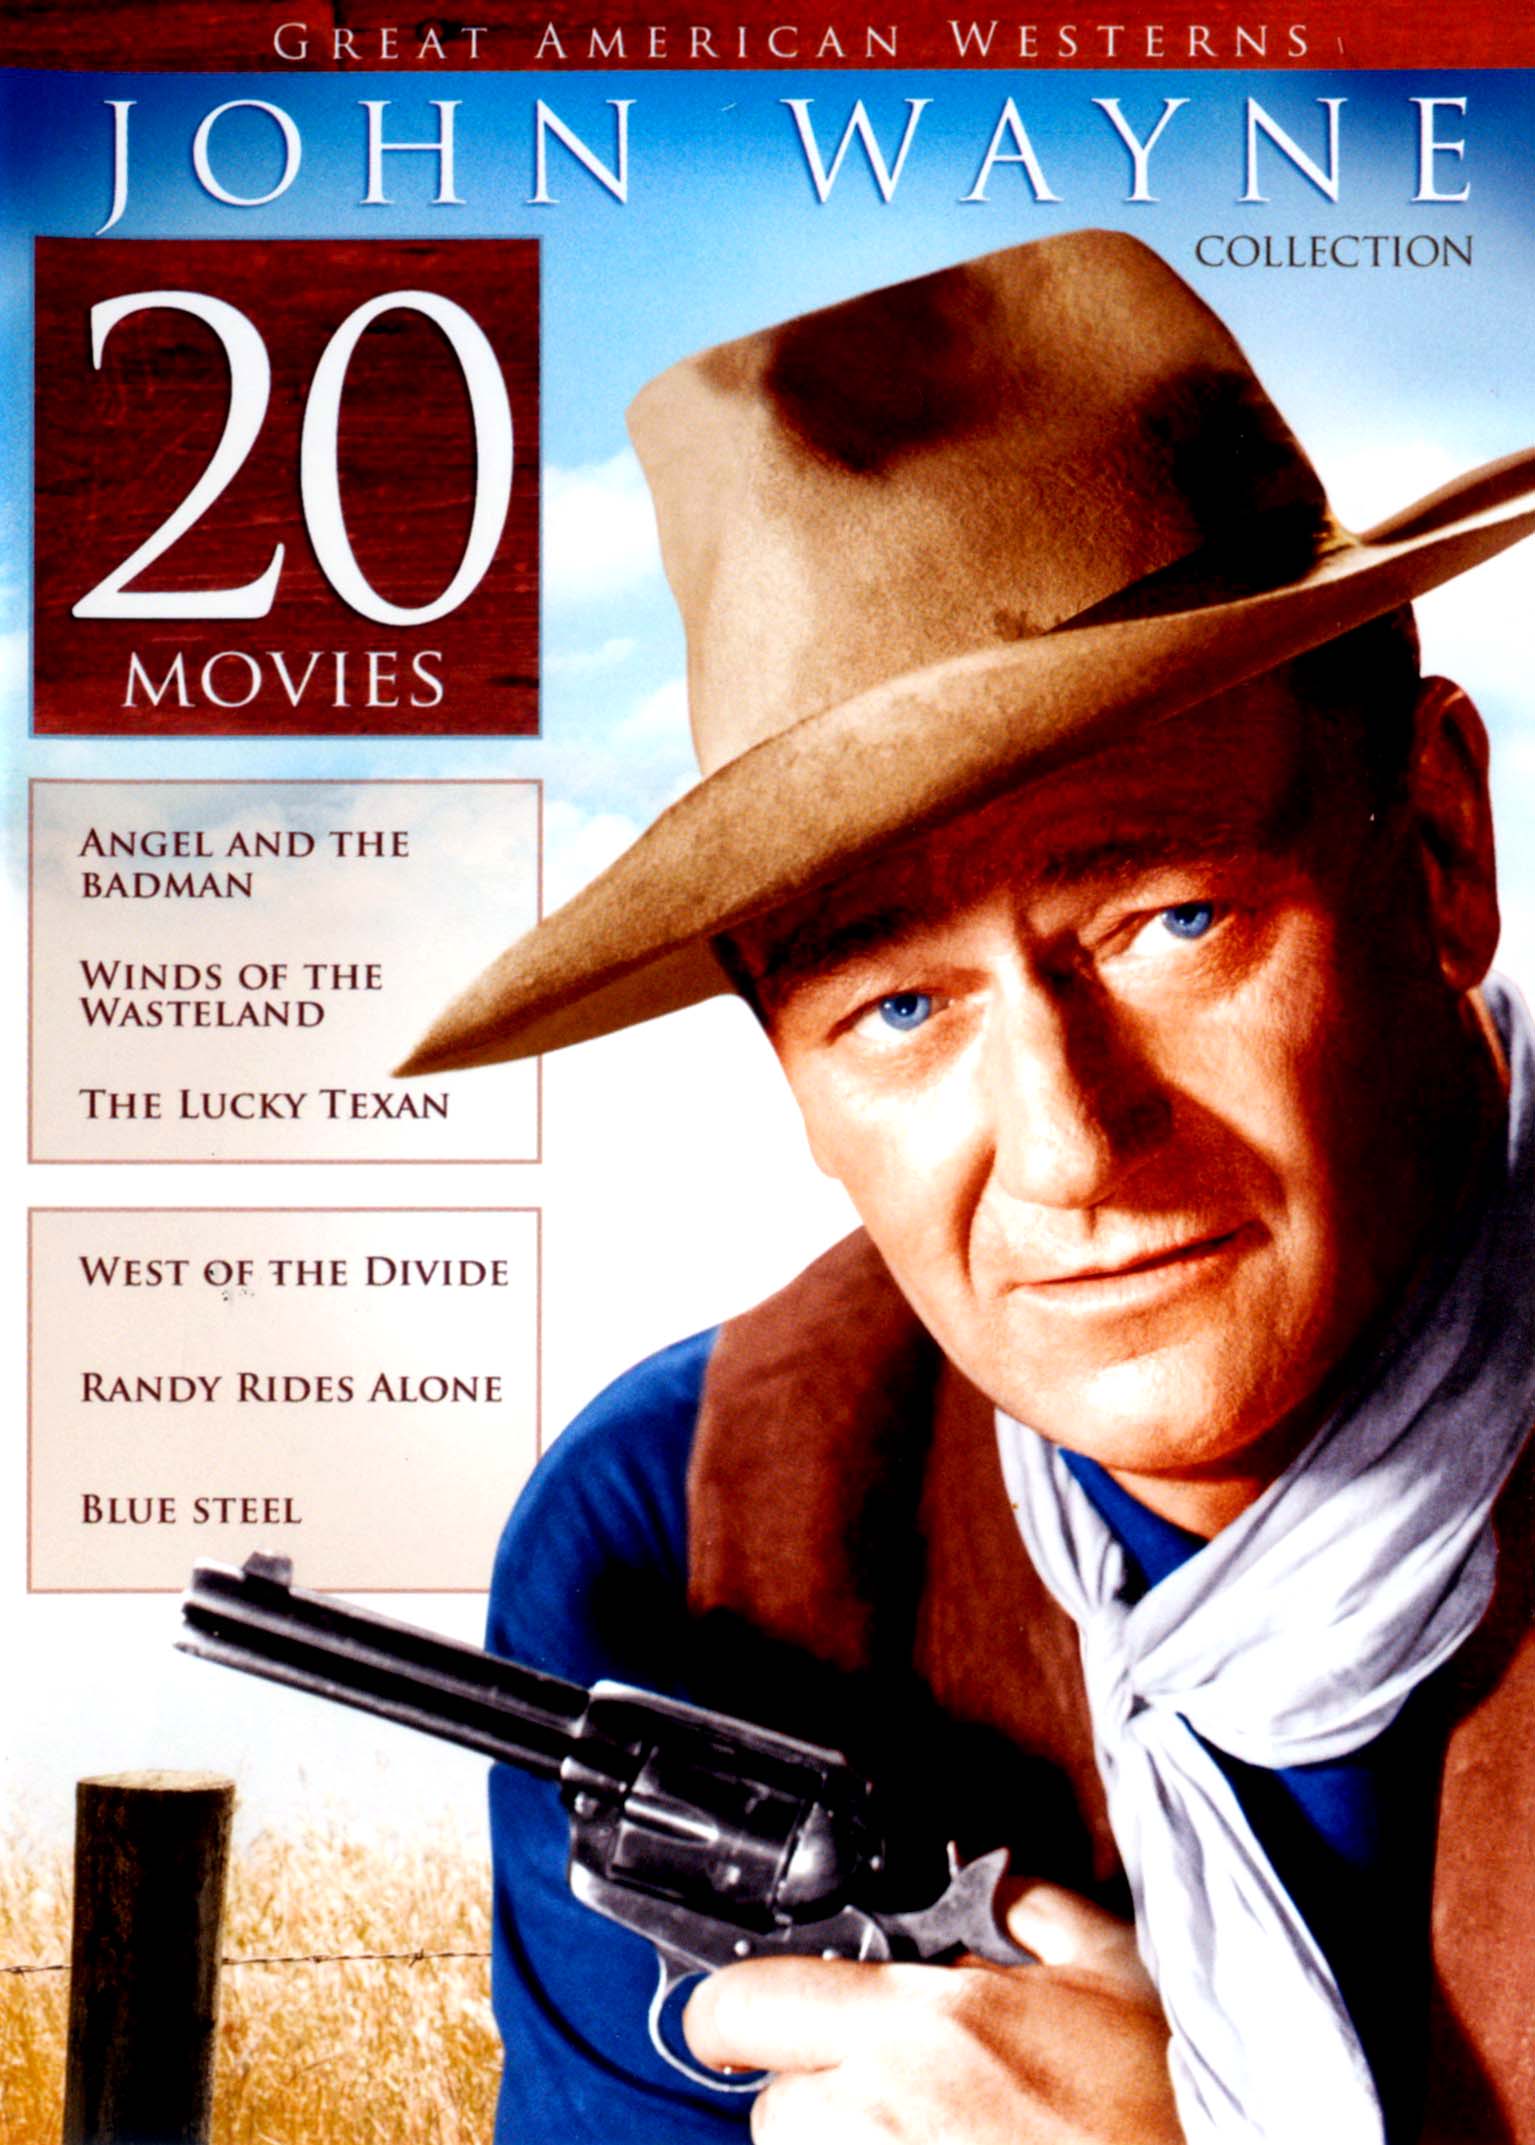 Great American Westerns John Wayne Collection Movies Discs Dvd